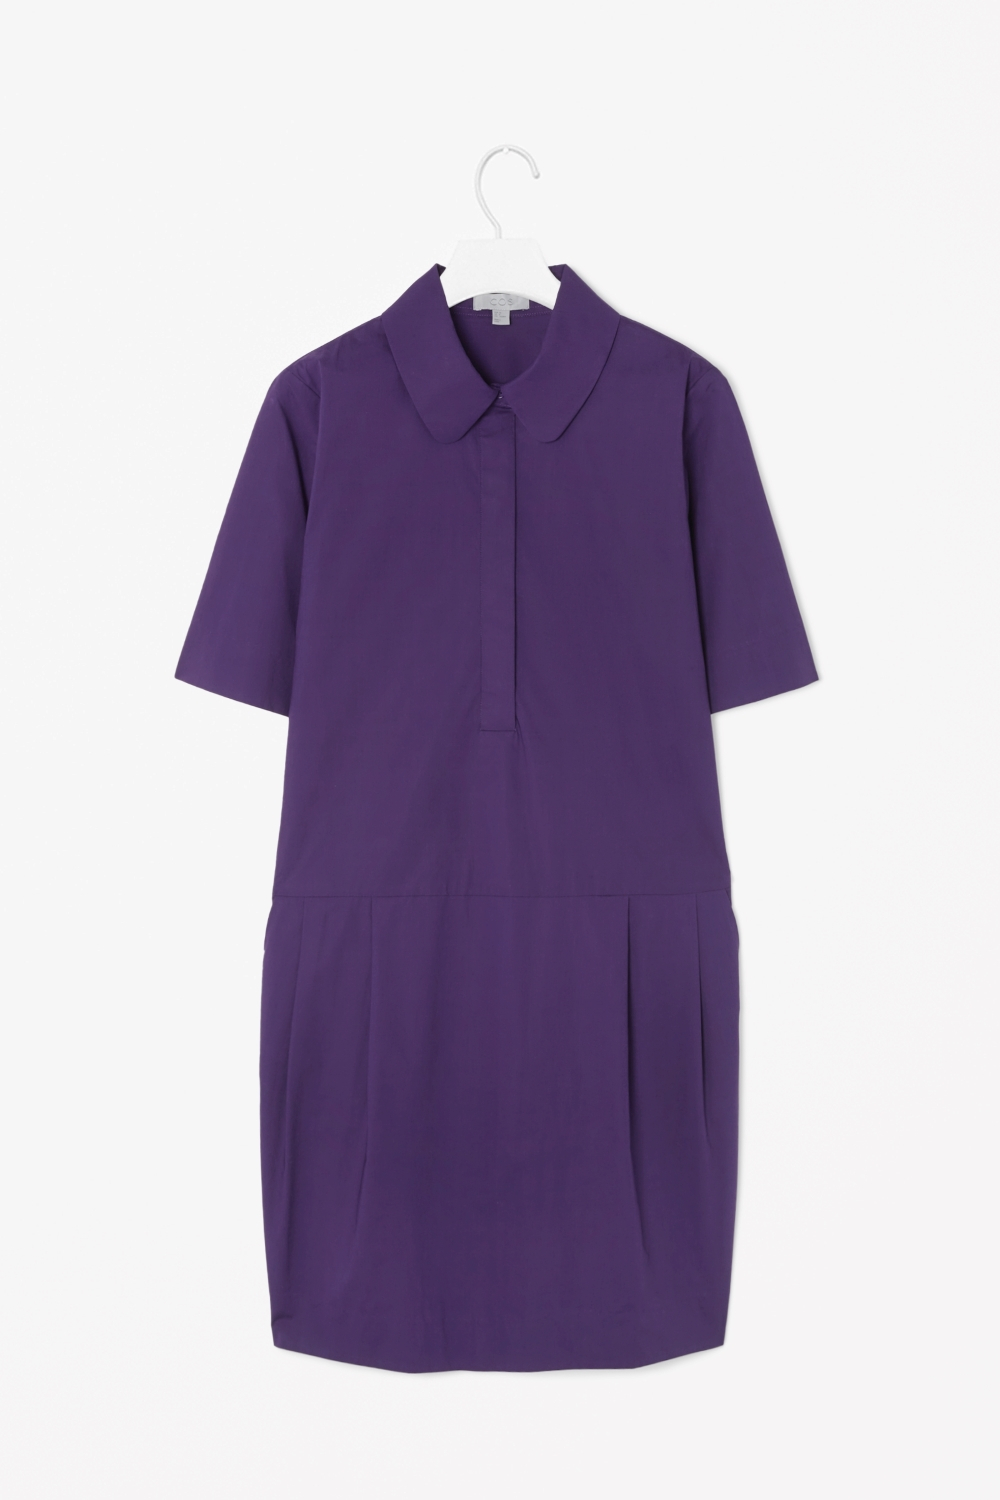 Cos Rounded Collar Shirt Dress in Purple (Purple Bluish Dark) | Lyst